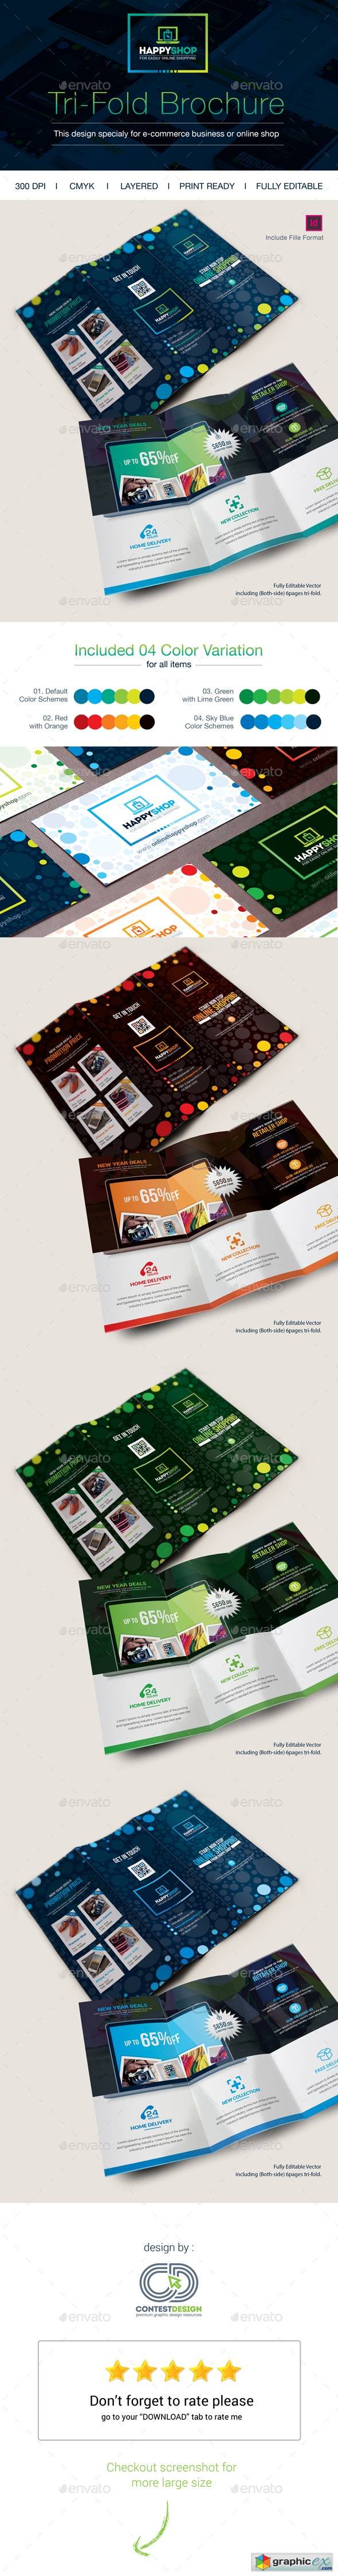 HappyShop : E-Commerce Tri-Fold Brochure